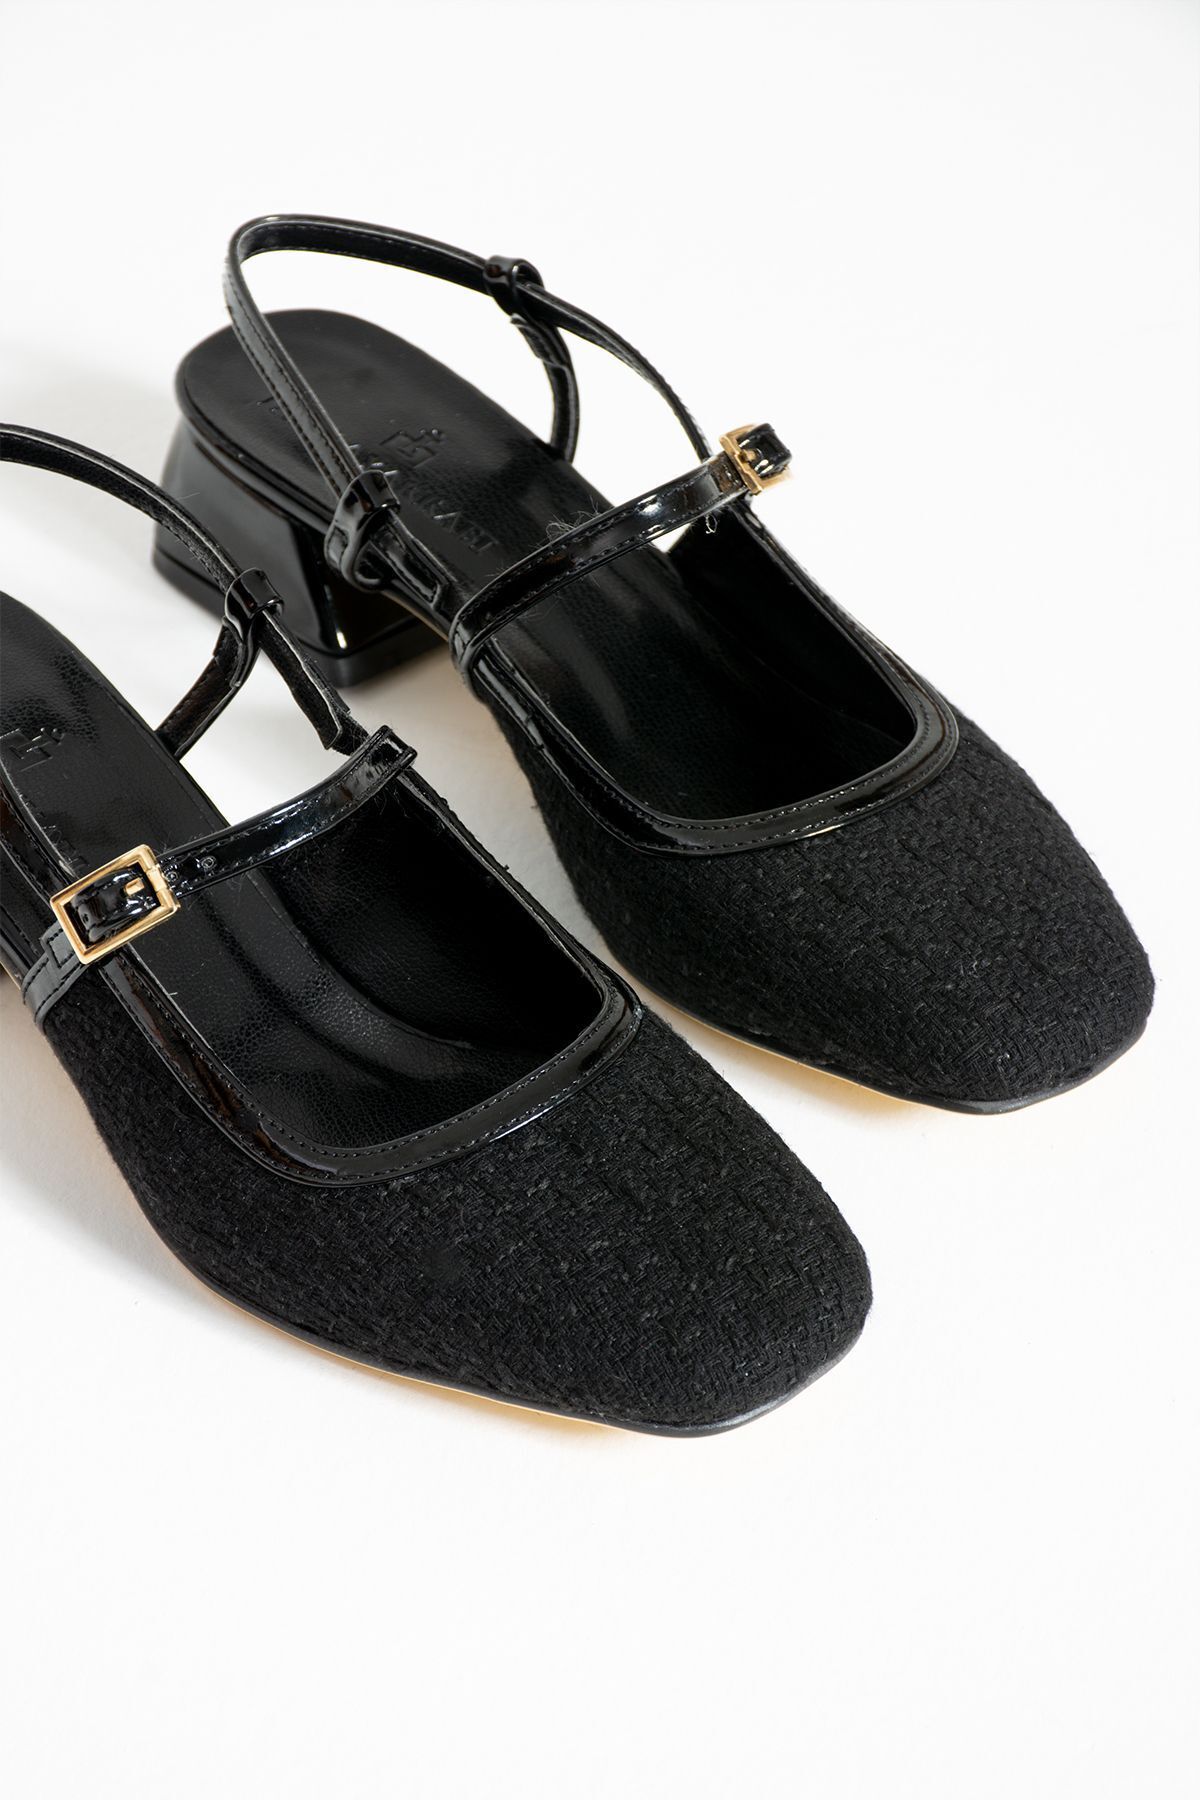 İnan Ayakkabı Kadın Siyah Renk Toka Detaylı Topuklu Ayakkabı 3 Cm Topuk